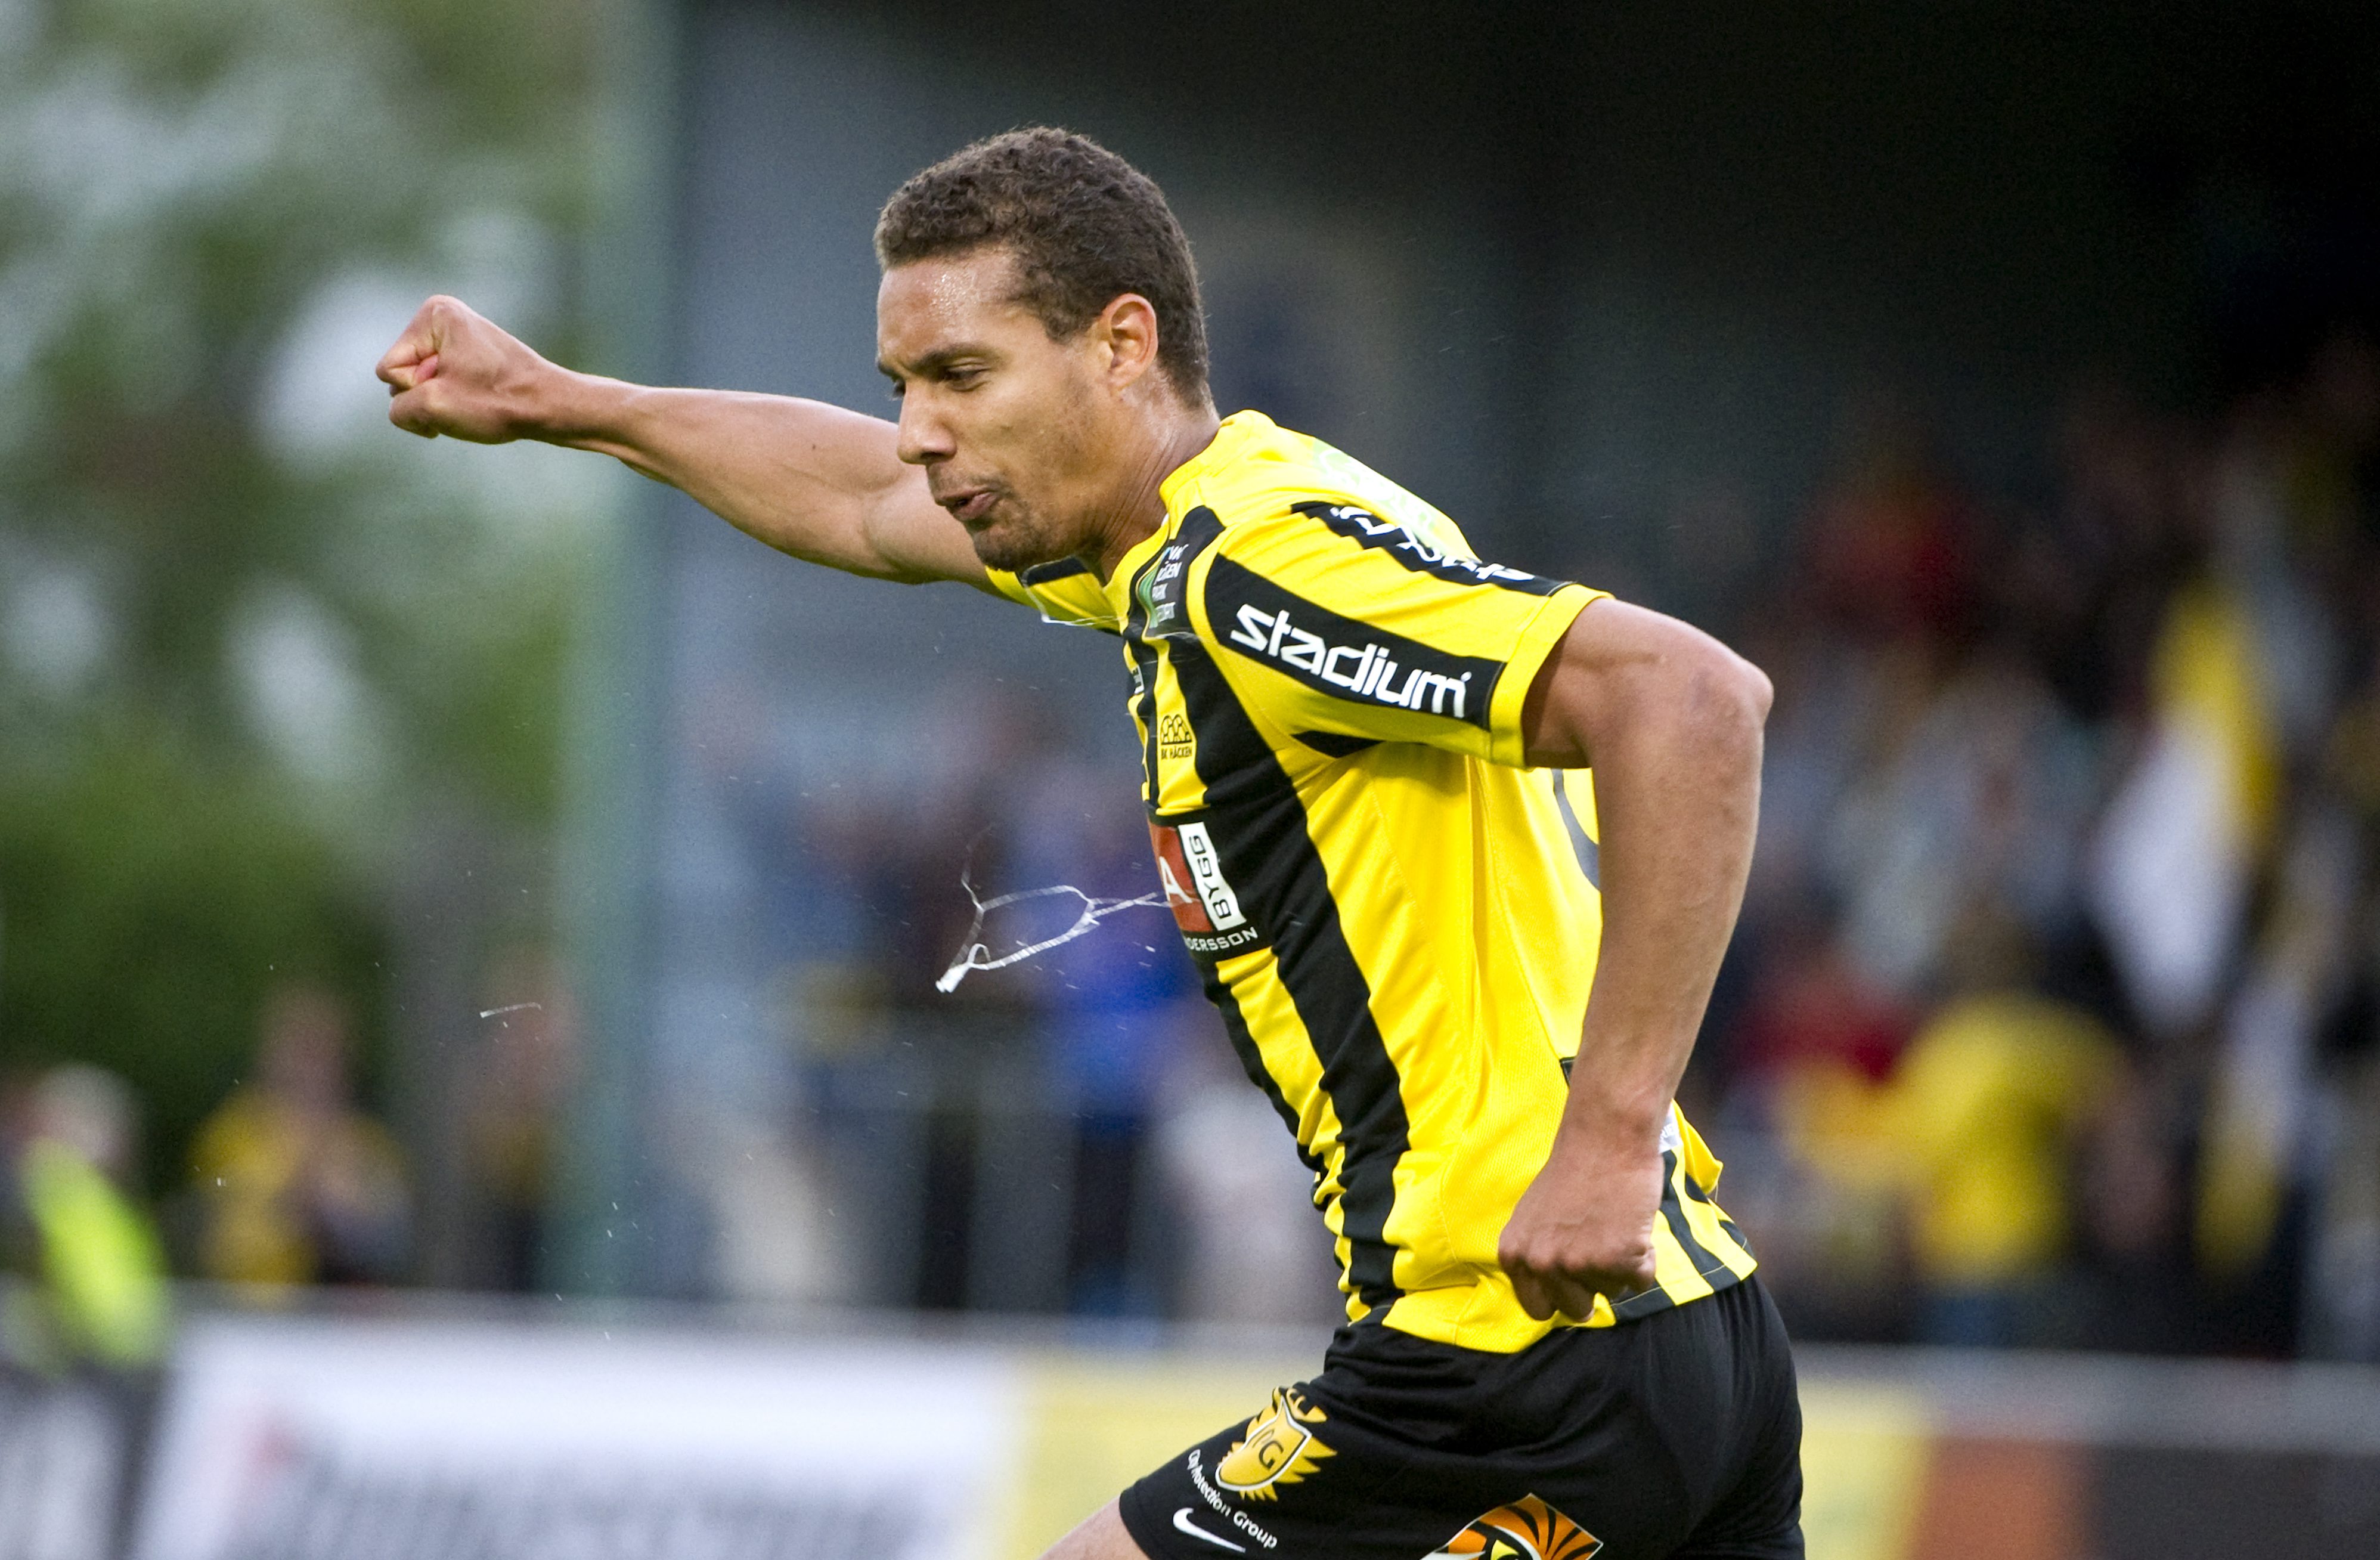 Mathias Ranégies 1-2-mål säkrade Häckens vinst mot Gefle.